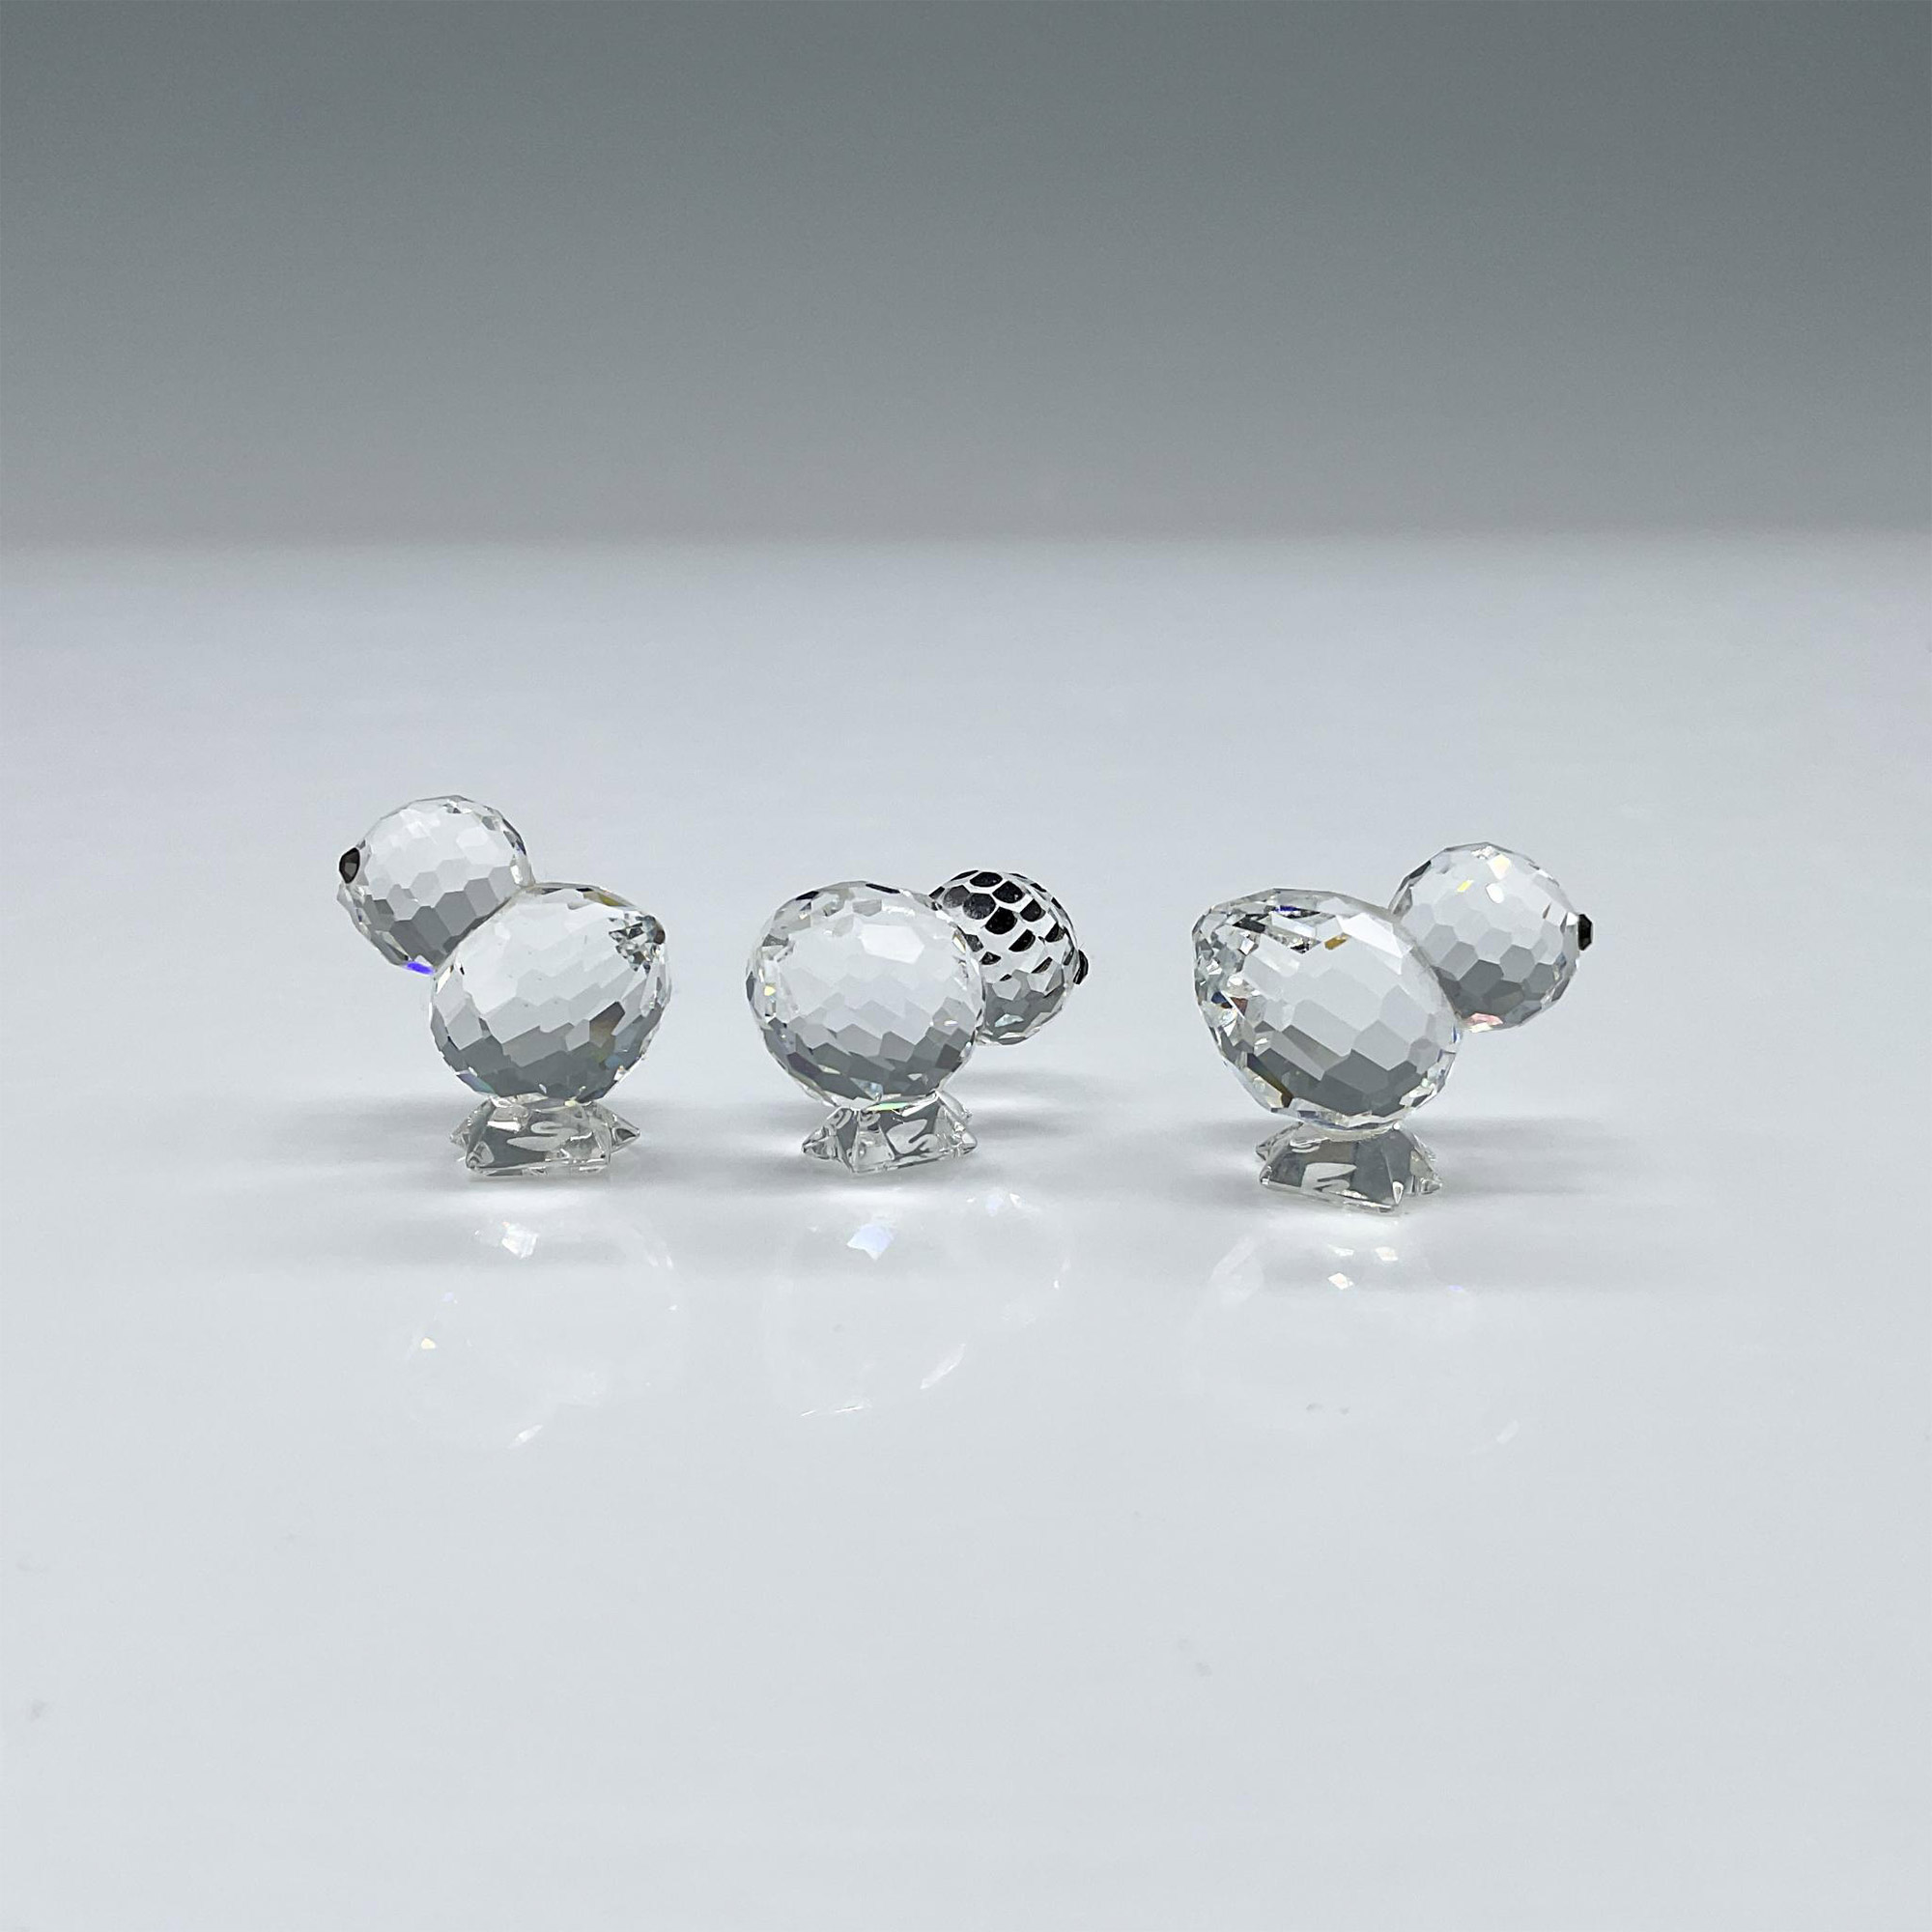 Swarovski Crystal Figurines, Chicks Mini - Image 2 of 5